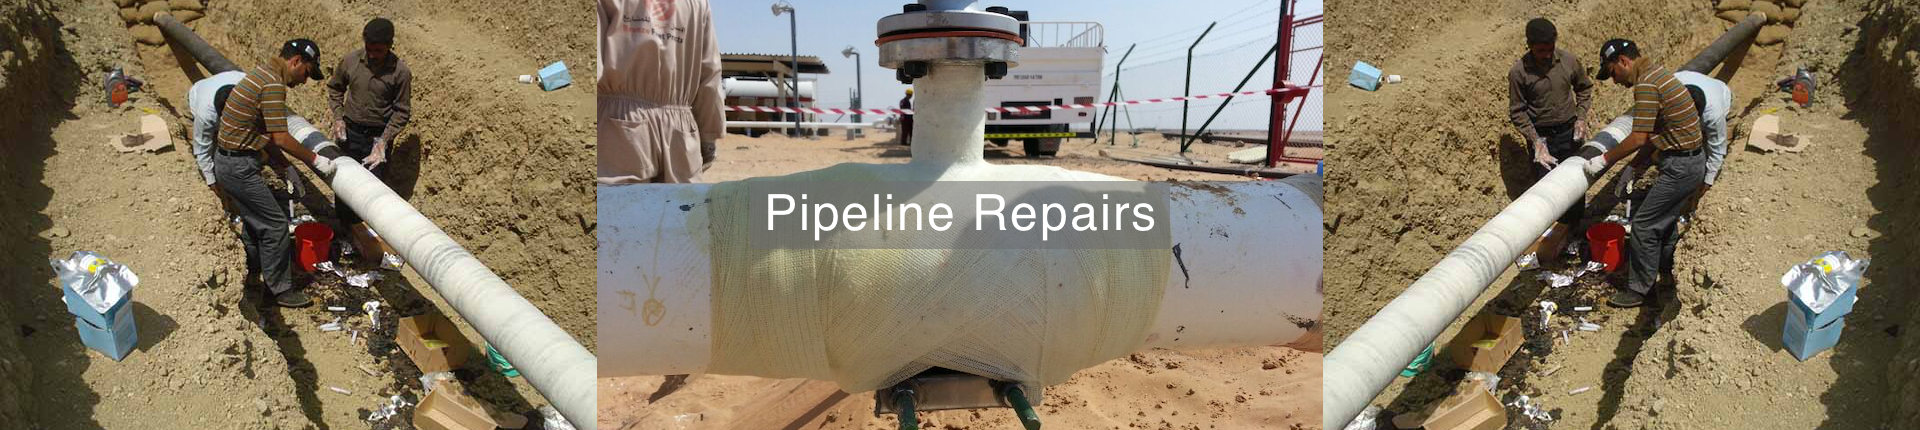 Pipeline Repairs